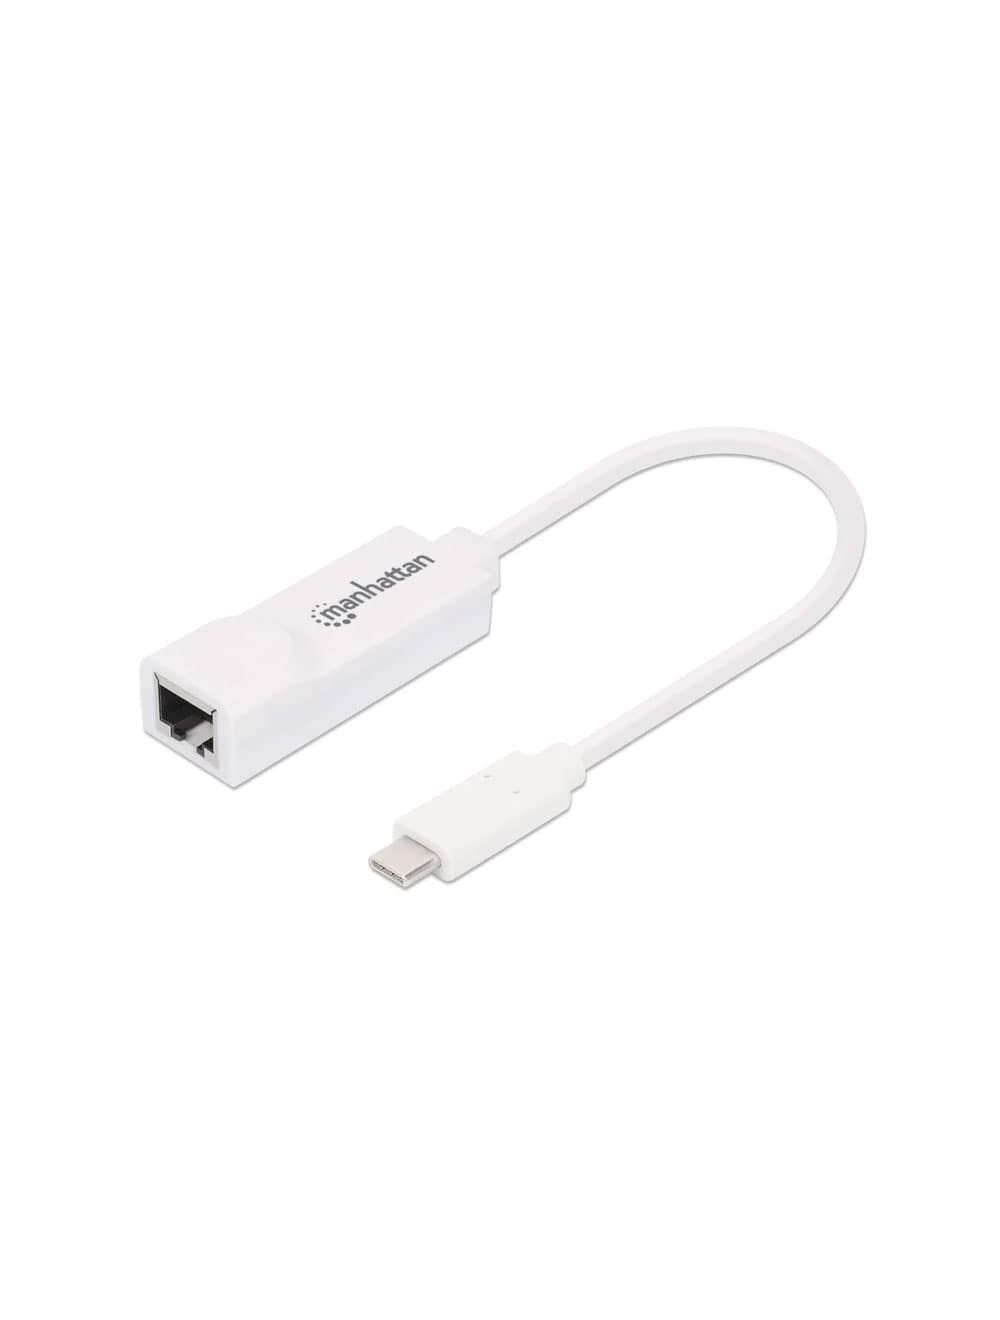 UE300C  TP-Link USB Ethernet Adapter USB 3.0 RJ45 to USB C 10/100